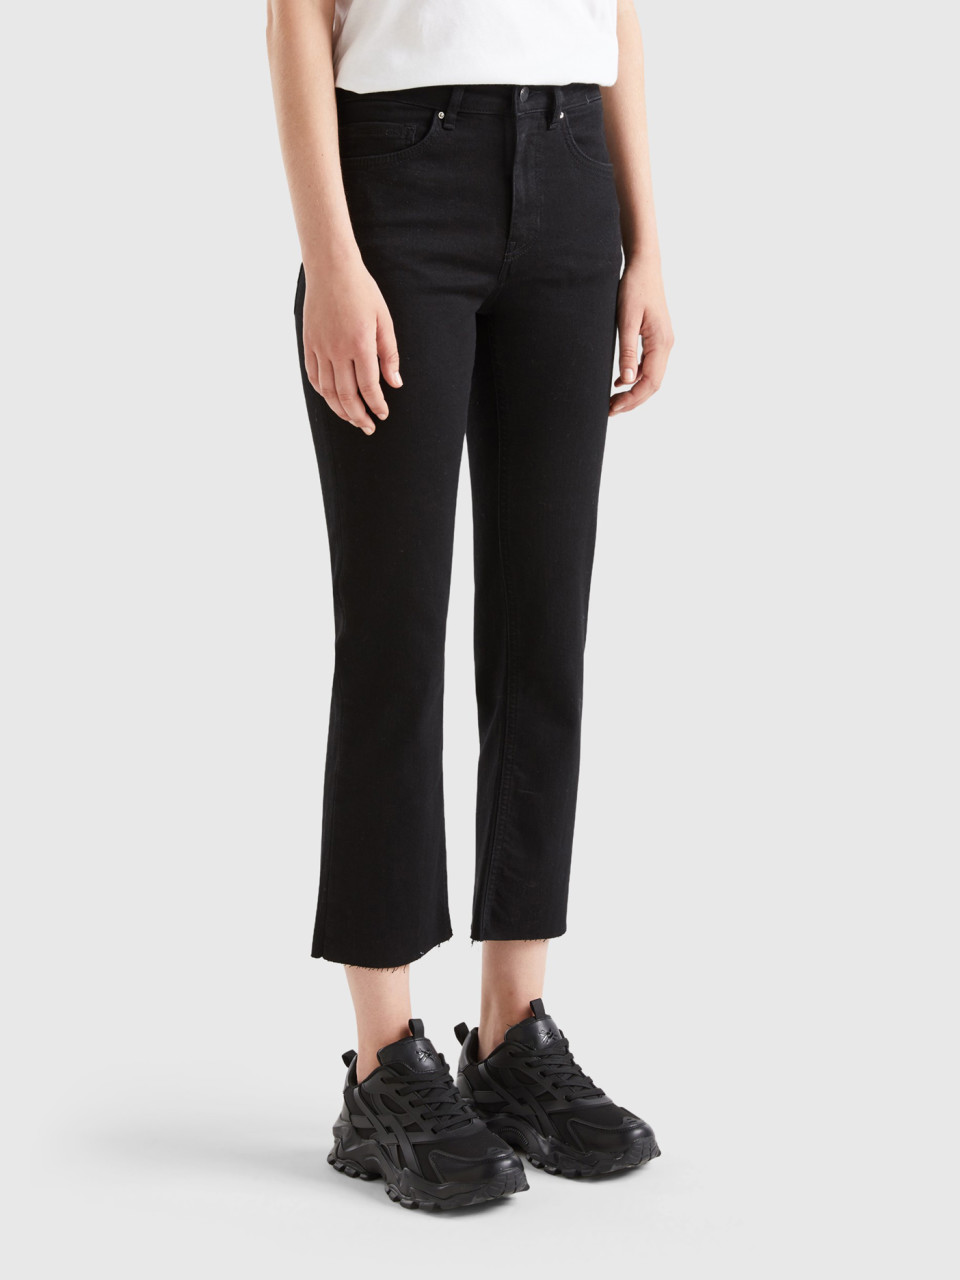 Benetton, Cropped Five-pocket Jeans, Black, Women